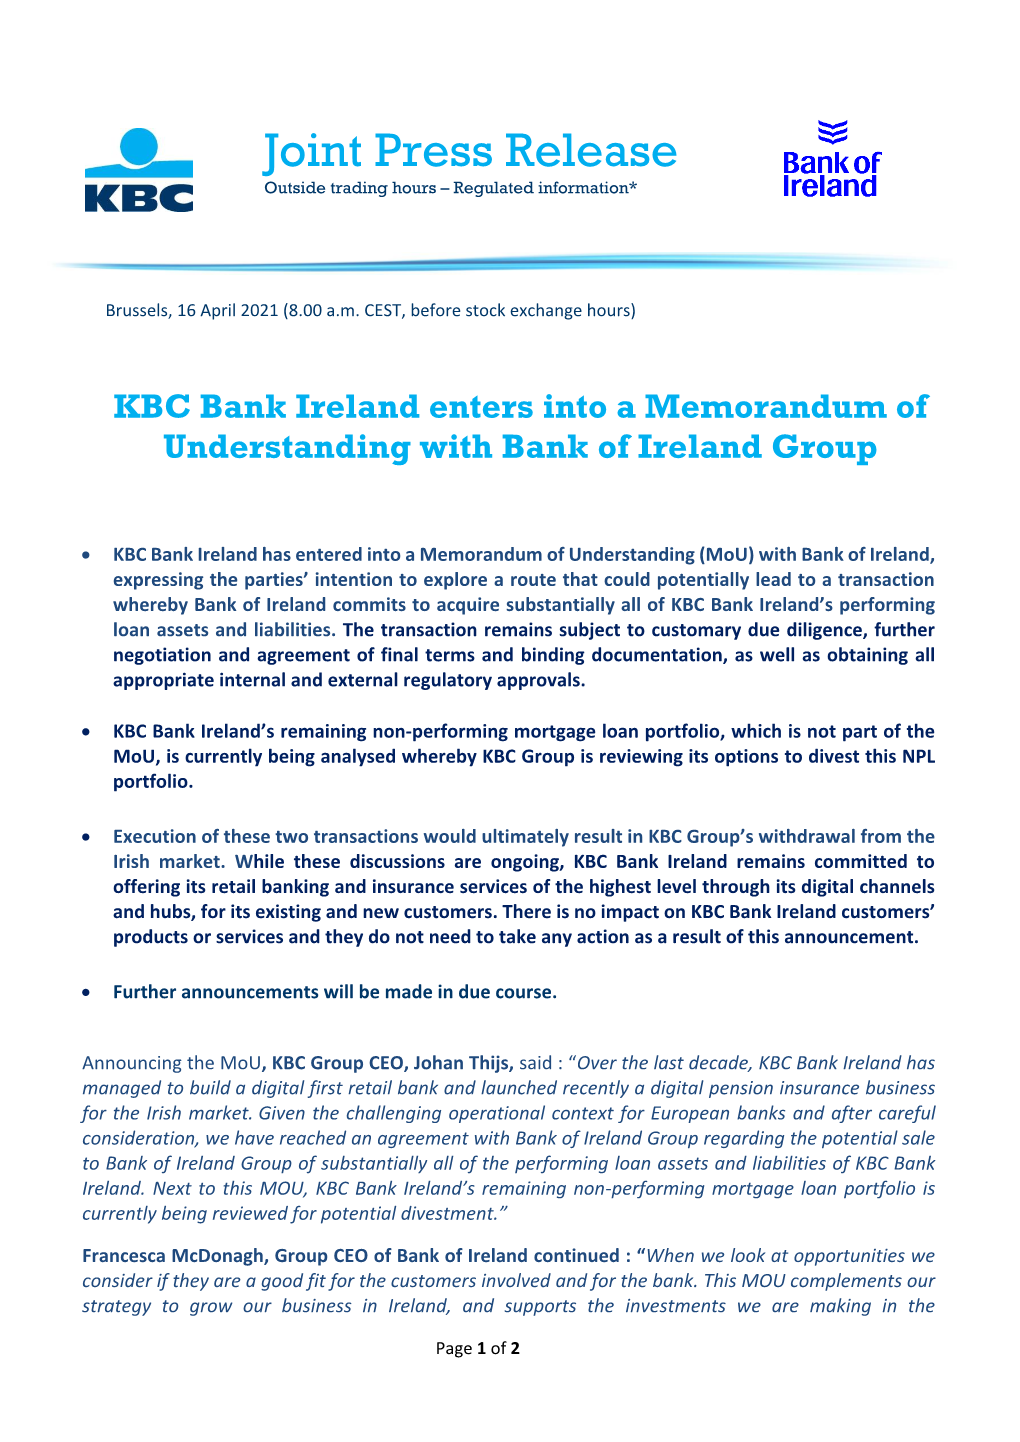 KBC Bank Ireland Enters Into a Memorandum of Understanding with Bank of Ireland Group